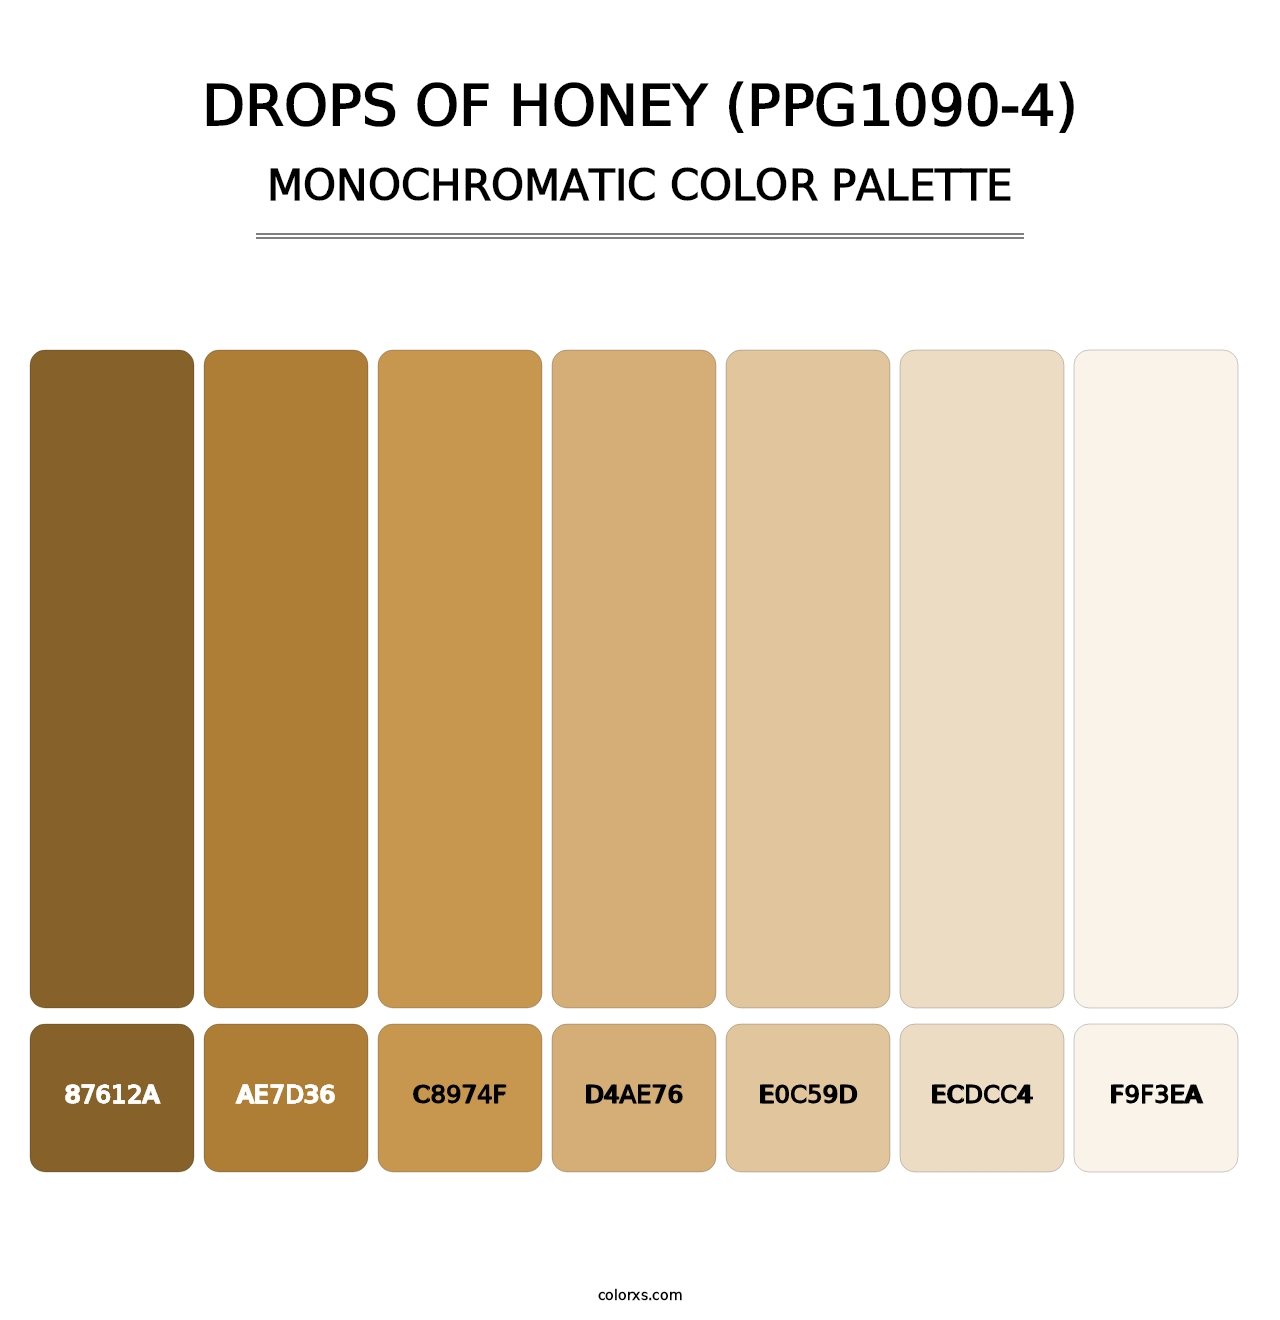 Drops Of Honey (PPG1090-4) - Monochromatic Color Palette